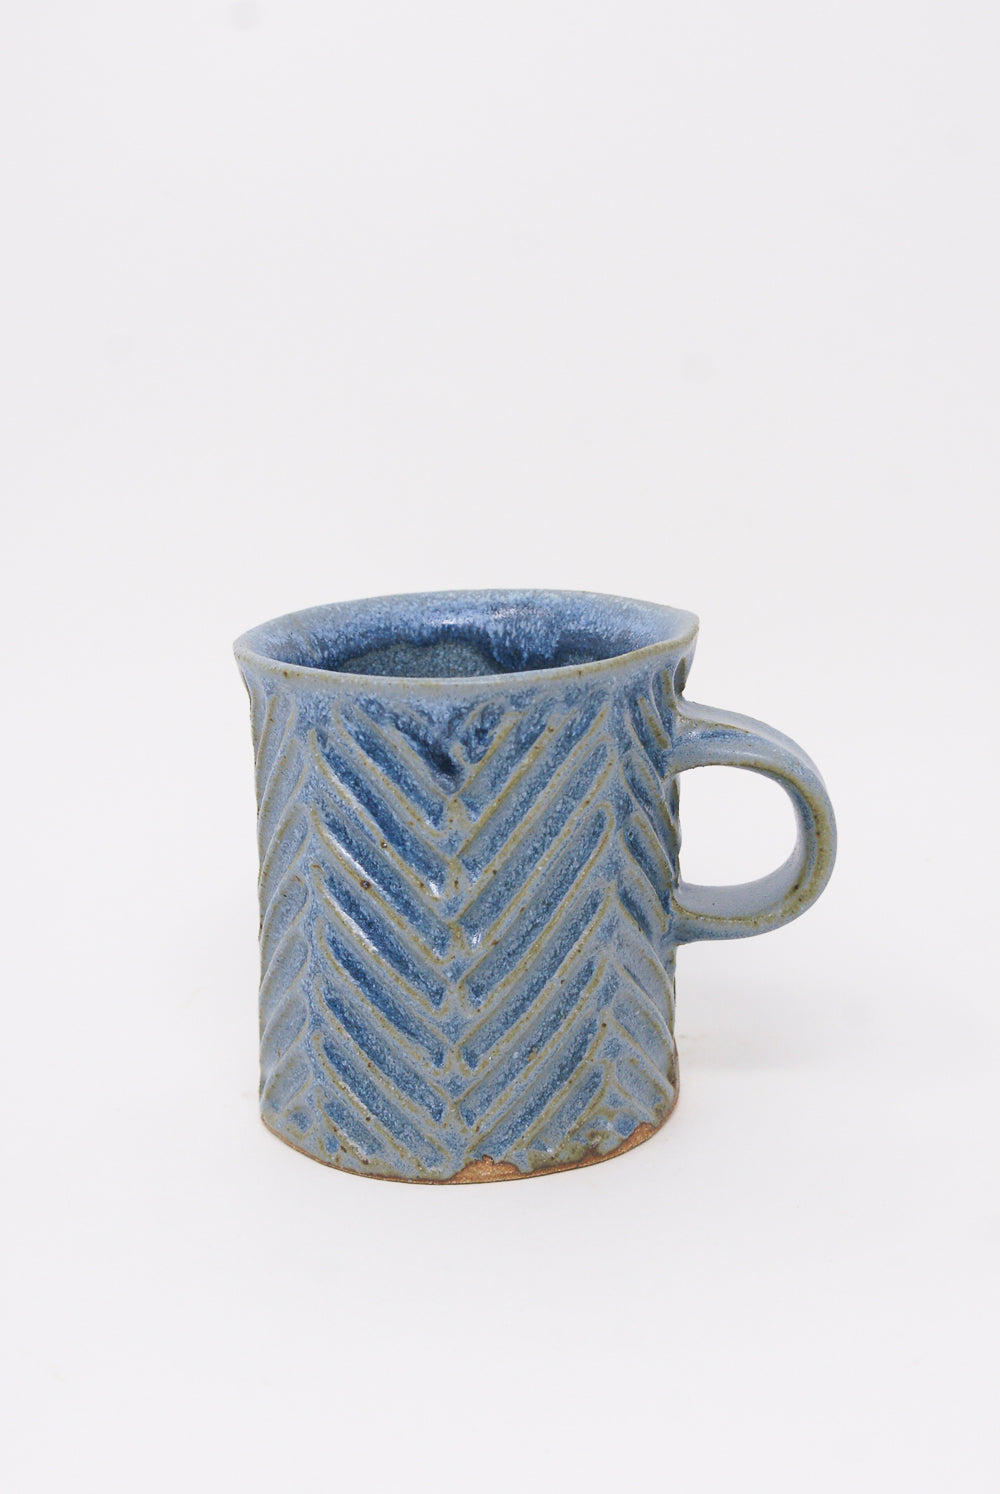 Mt. Washington Hand Built Chevron Carved Mug in Blue